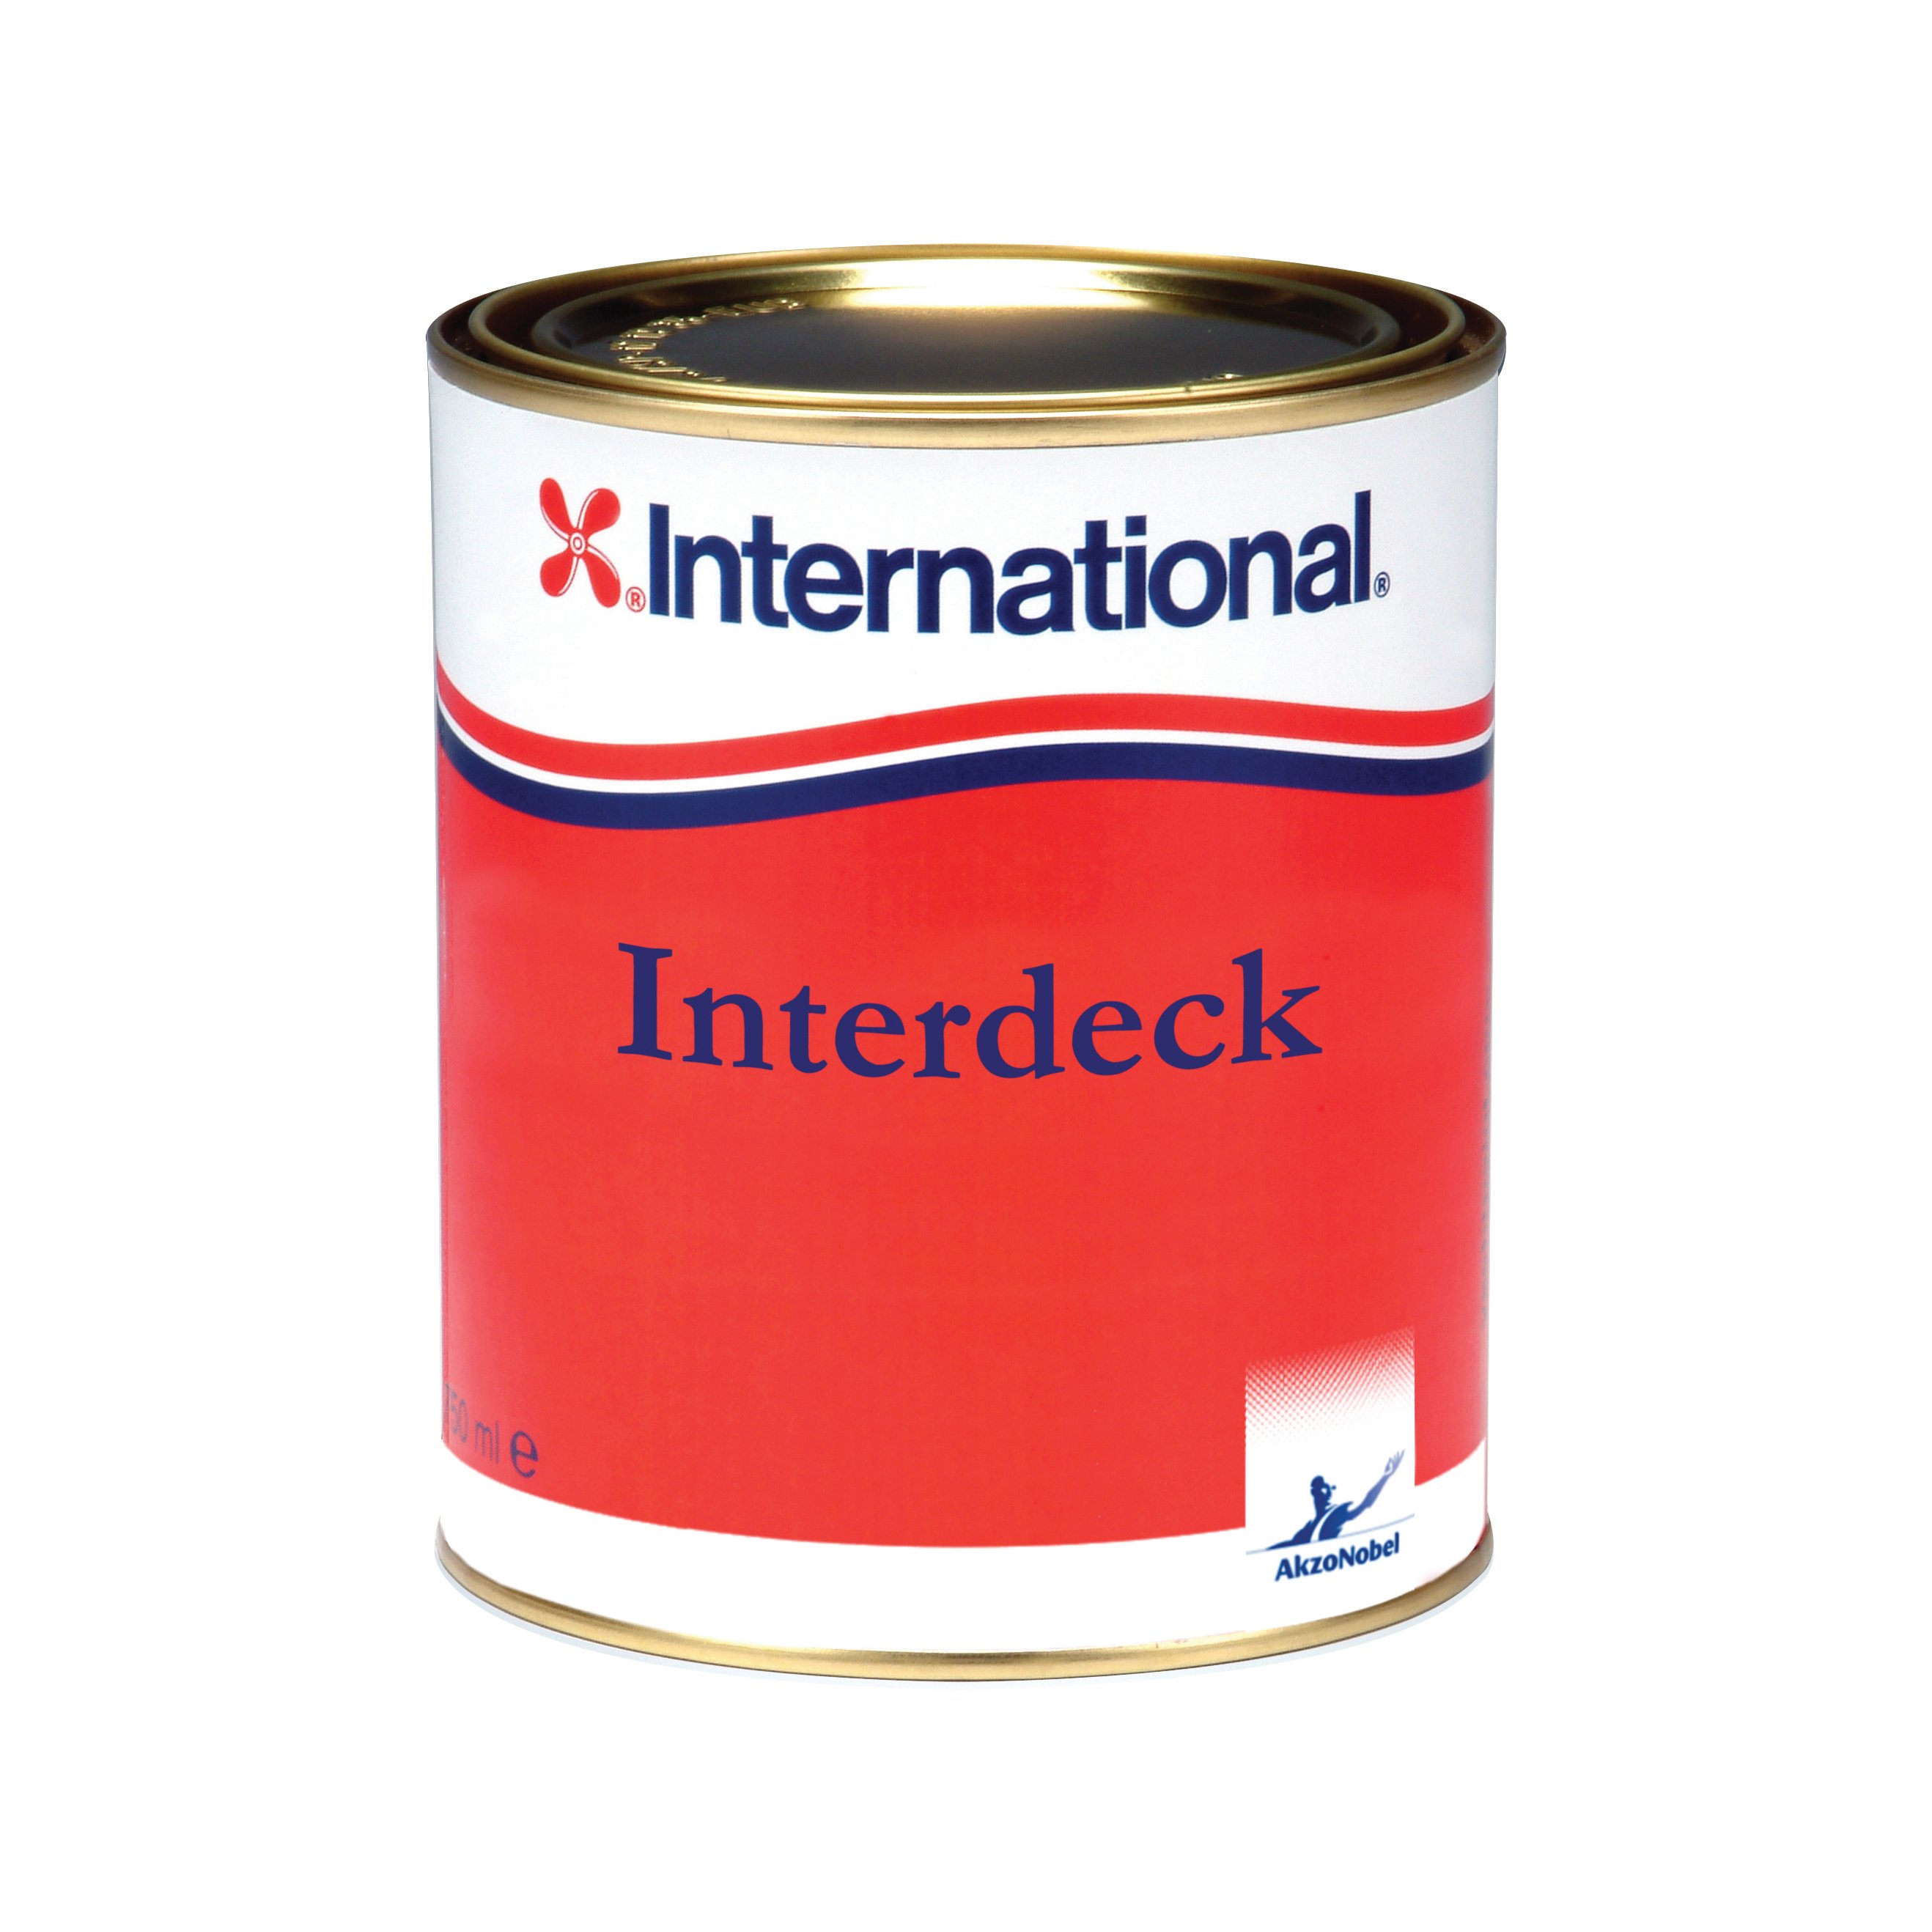 International Interdeck aflak - creme 027, 750ml